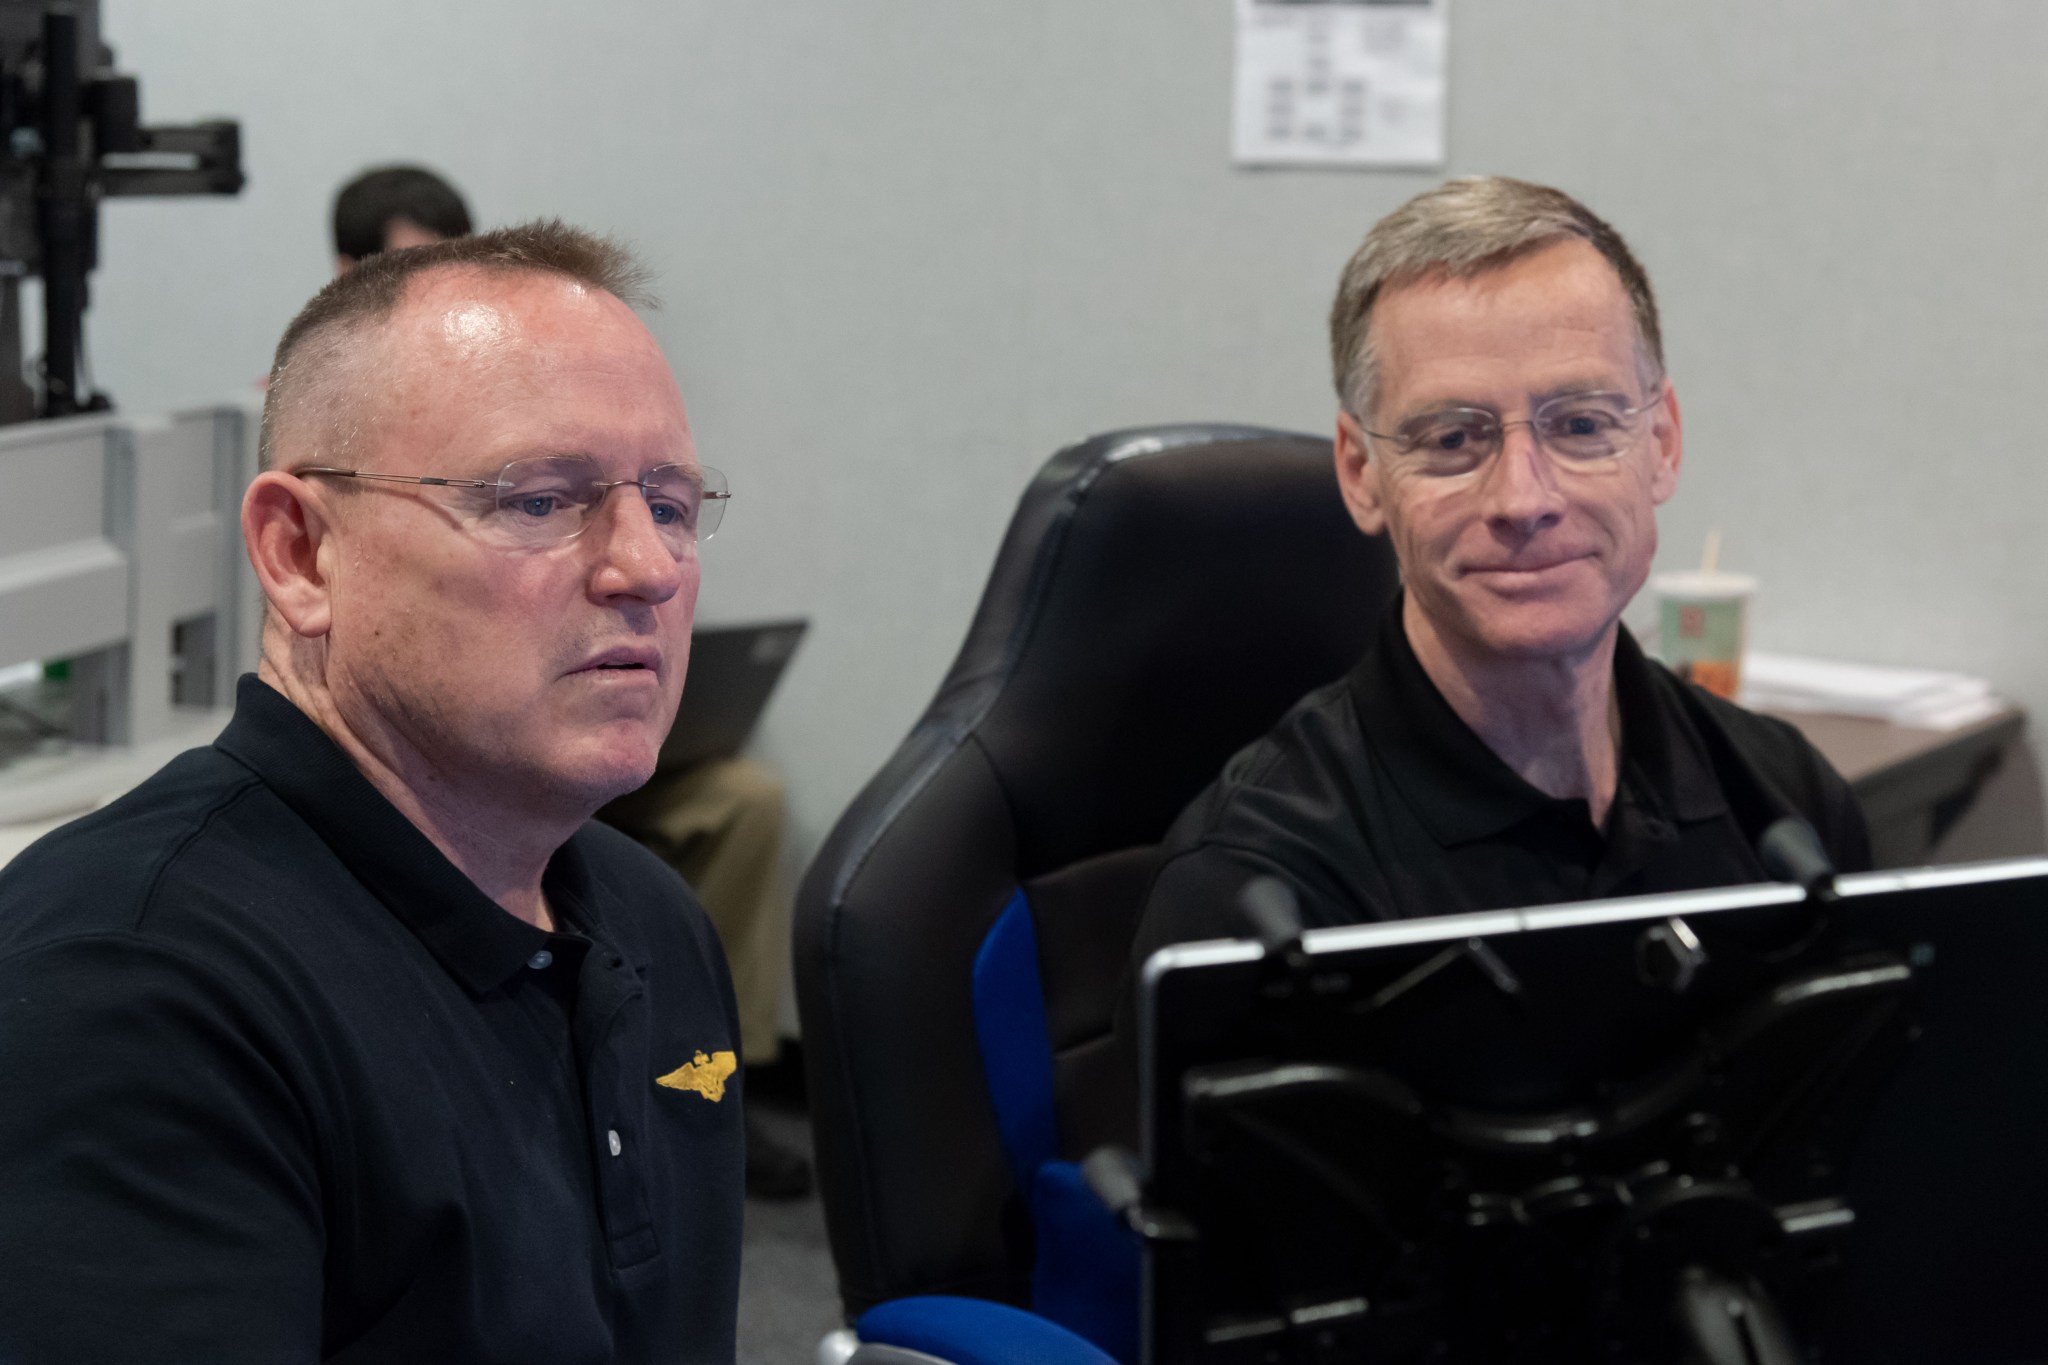 NASA astronaut Barry “Butch” Wilmore, left, and Chris Ferguson